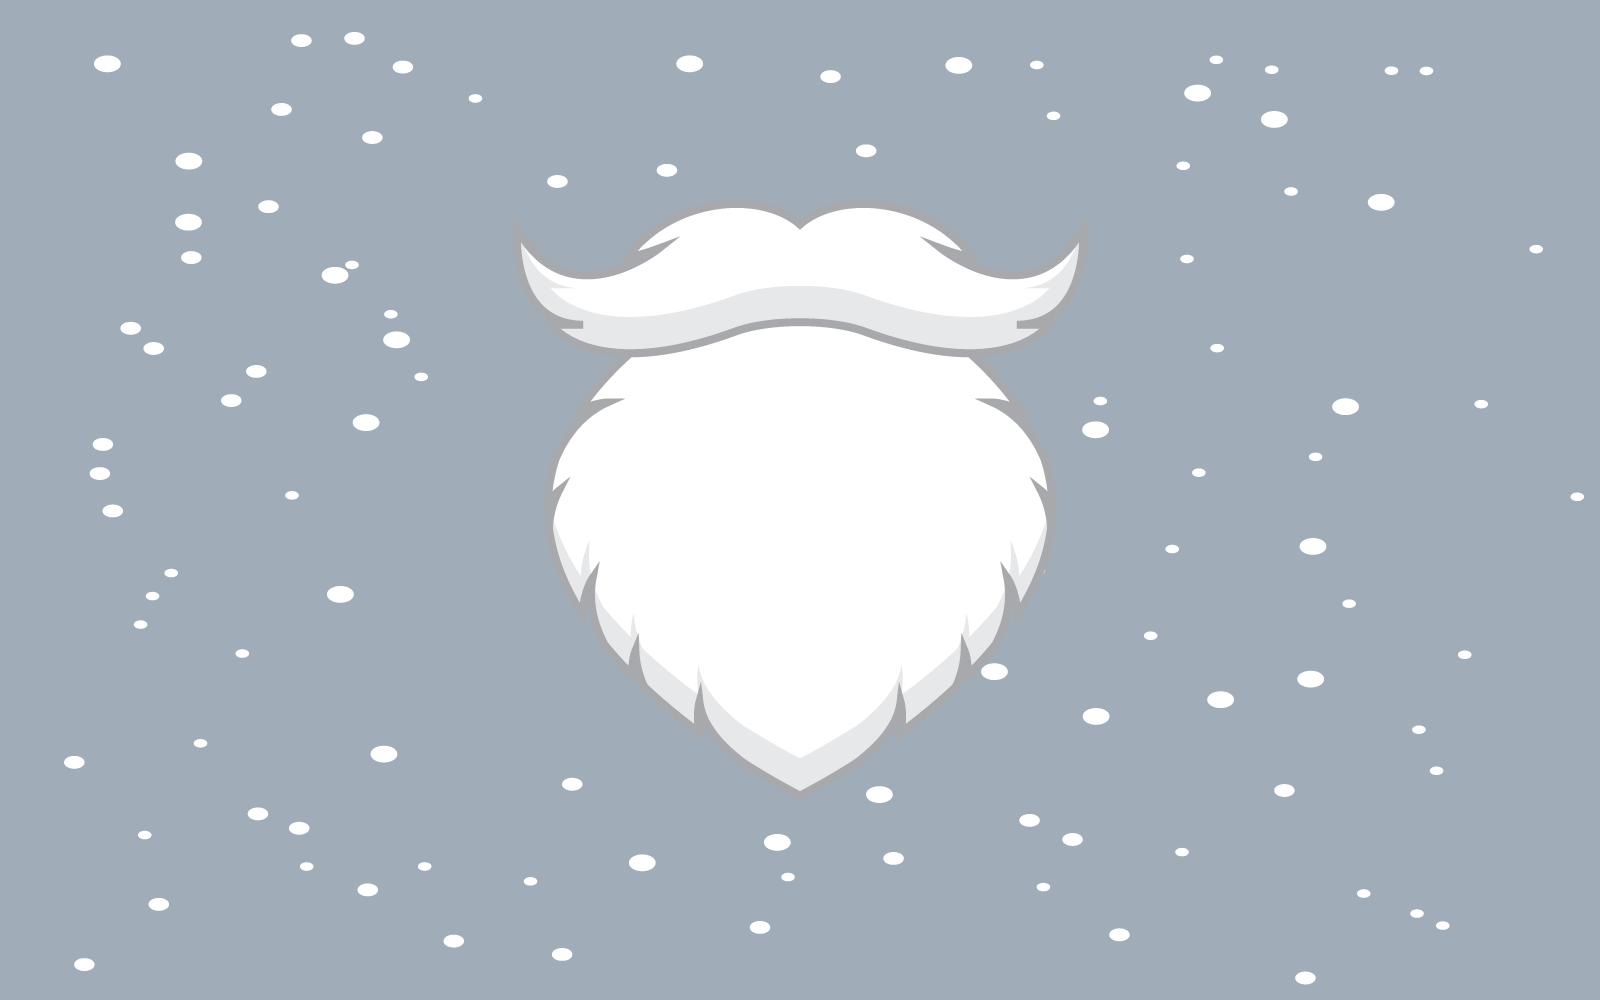 Santa Mustache and beard cartoon character icon flat design